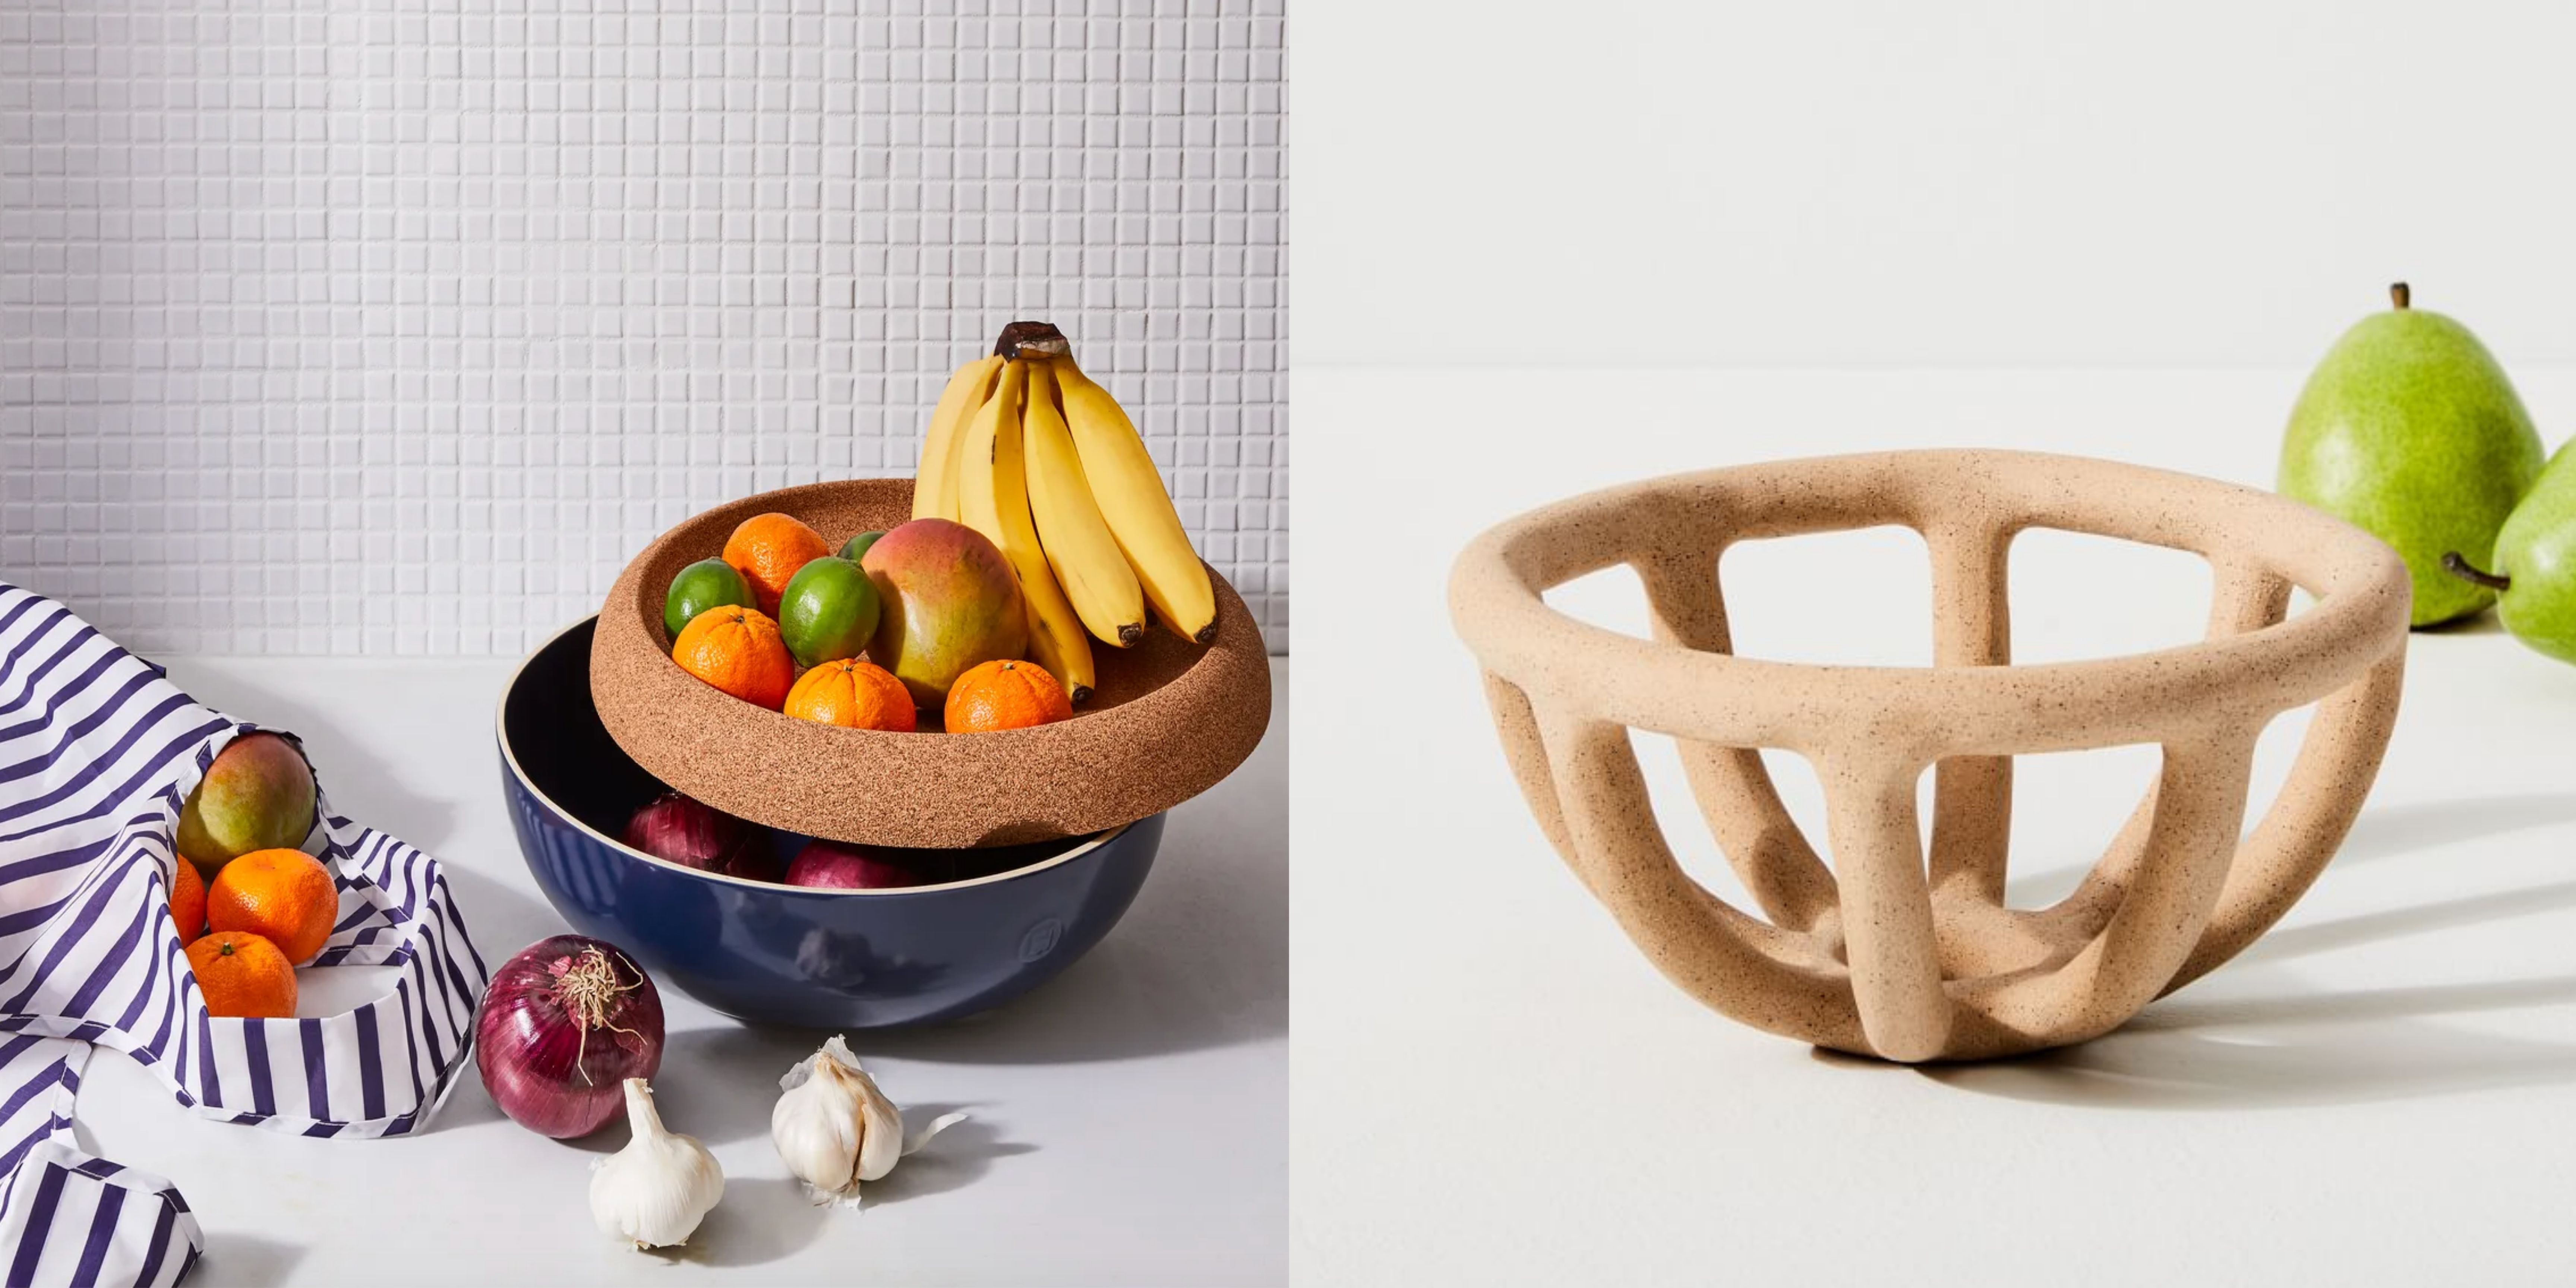 Fruit Basket with Banana Hanger (Medium) — Regal Trunk & Co.